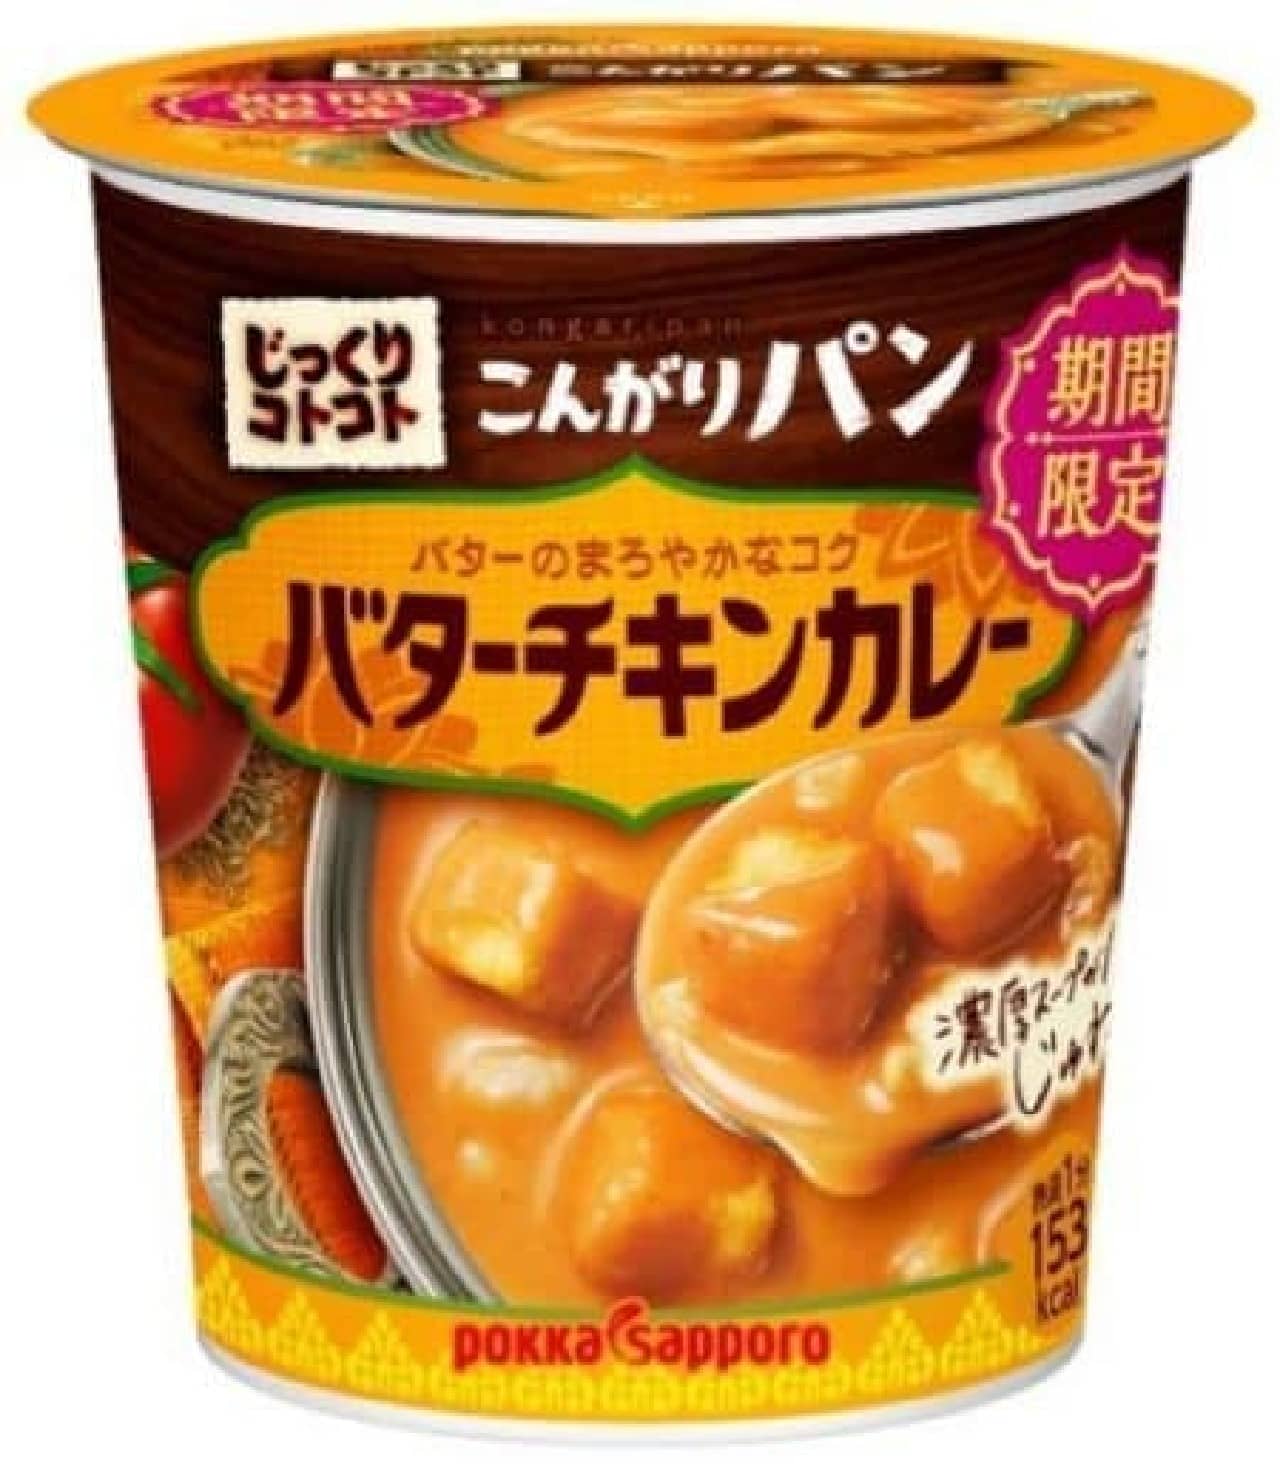 Pokka Sapporo "Slowly Kotokoto Kongari Bread Butter Chicken Curry"